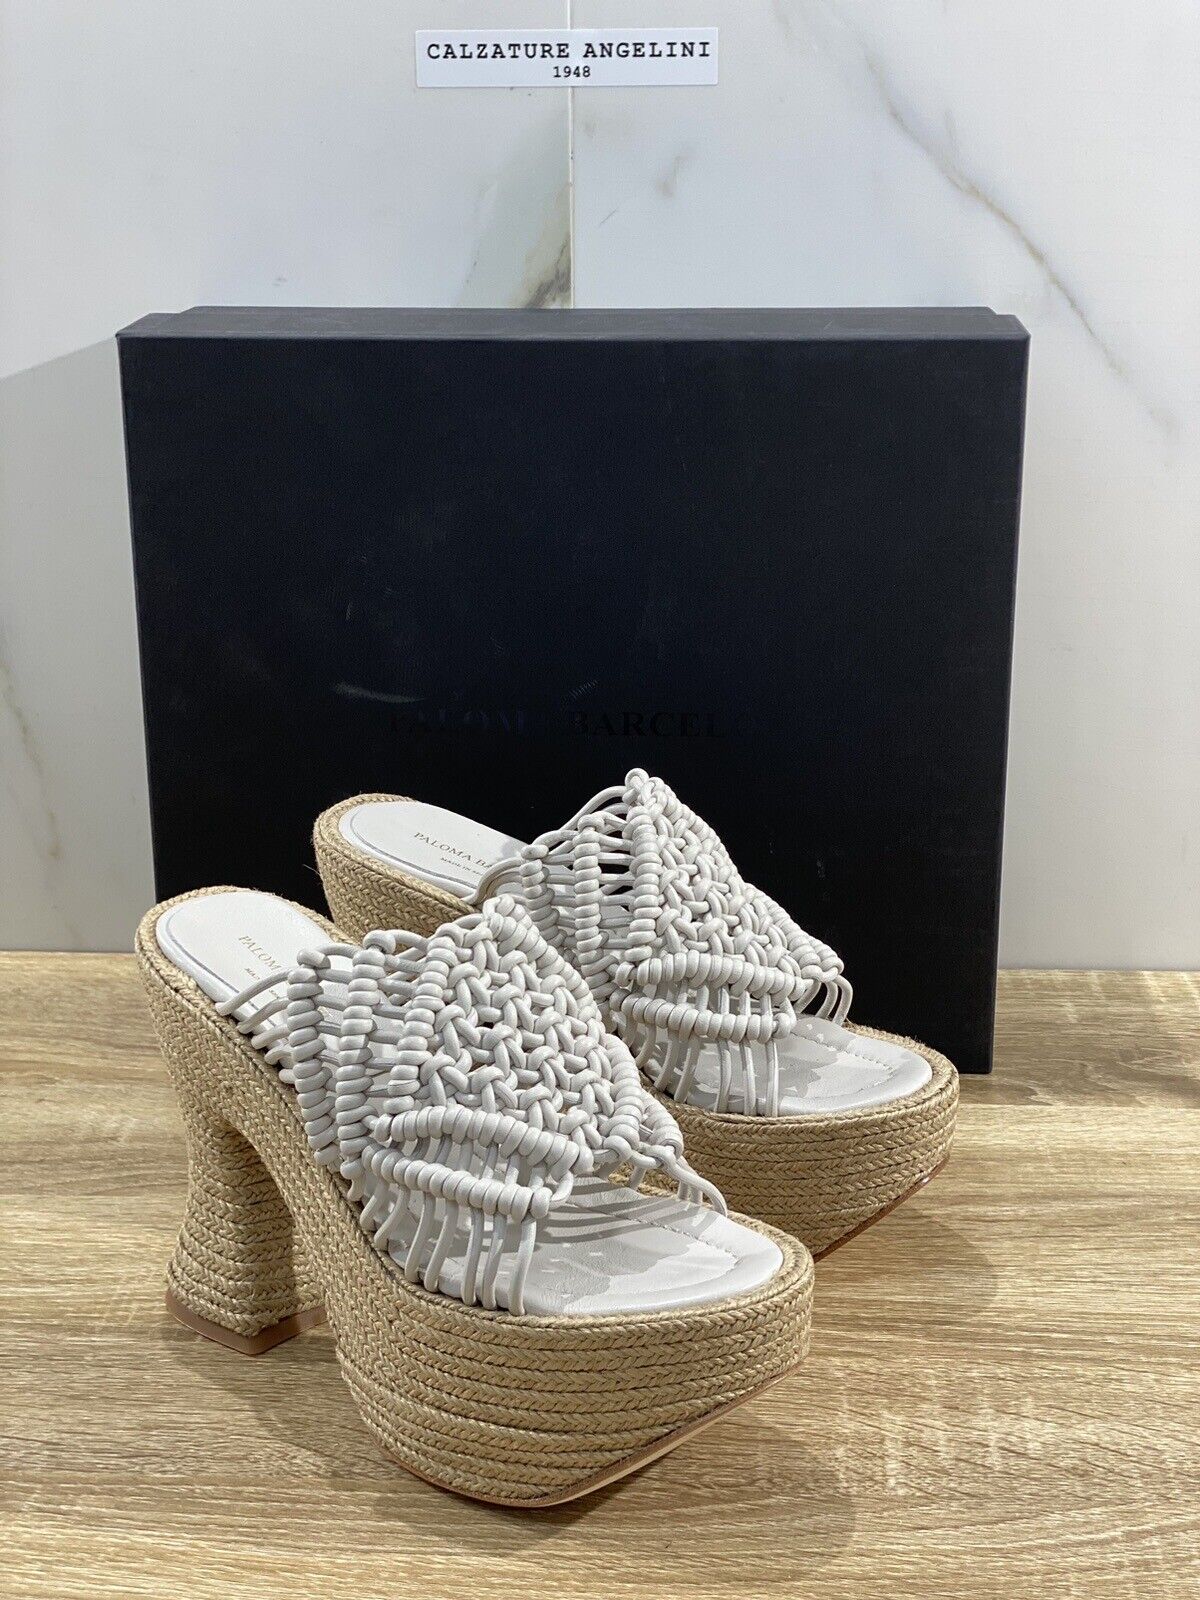 Paloma BARCELO’ Sandalo Donna Salma Pelle White Luxury Shoes 40